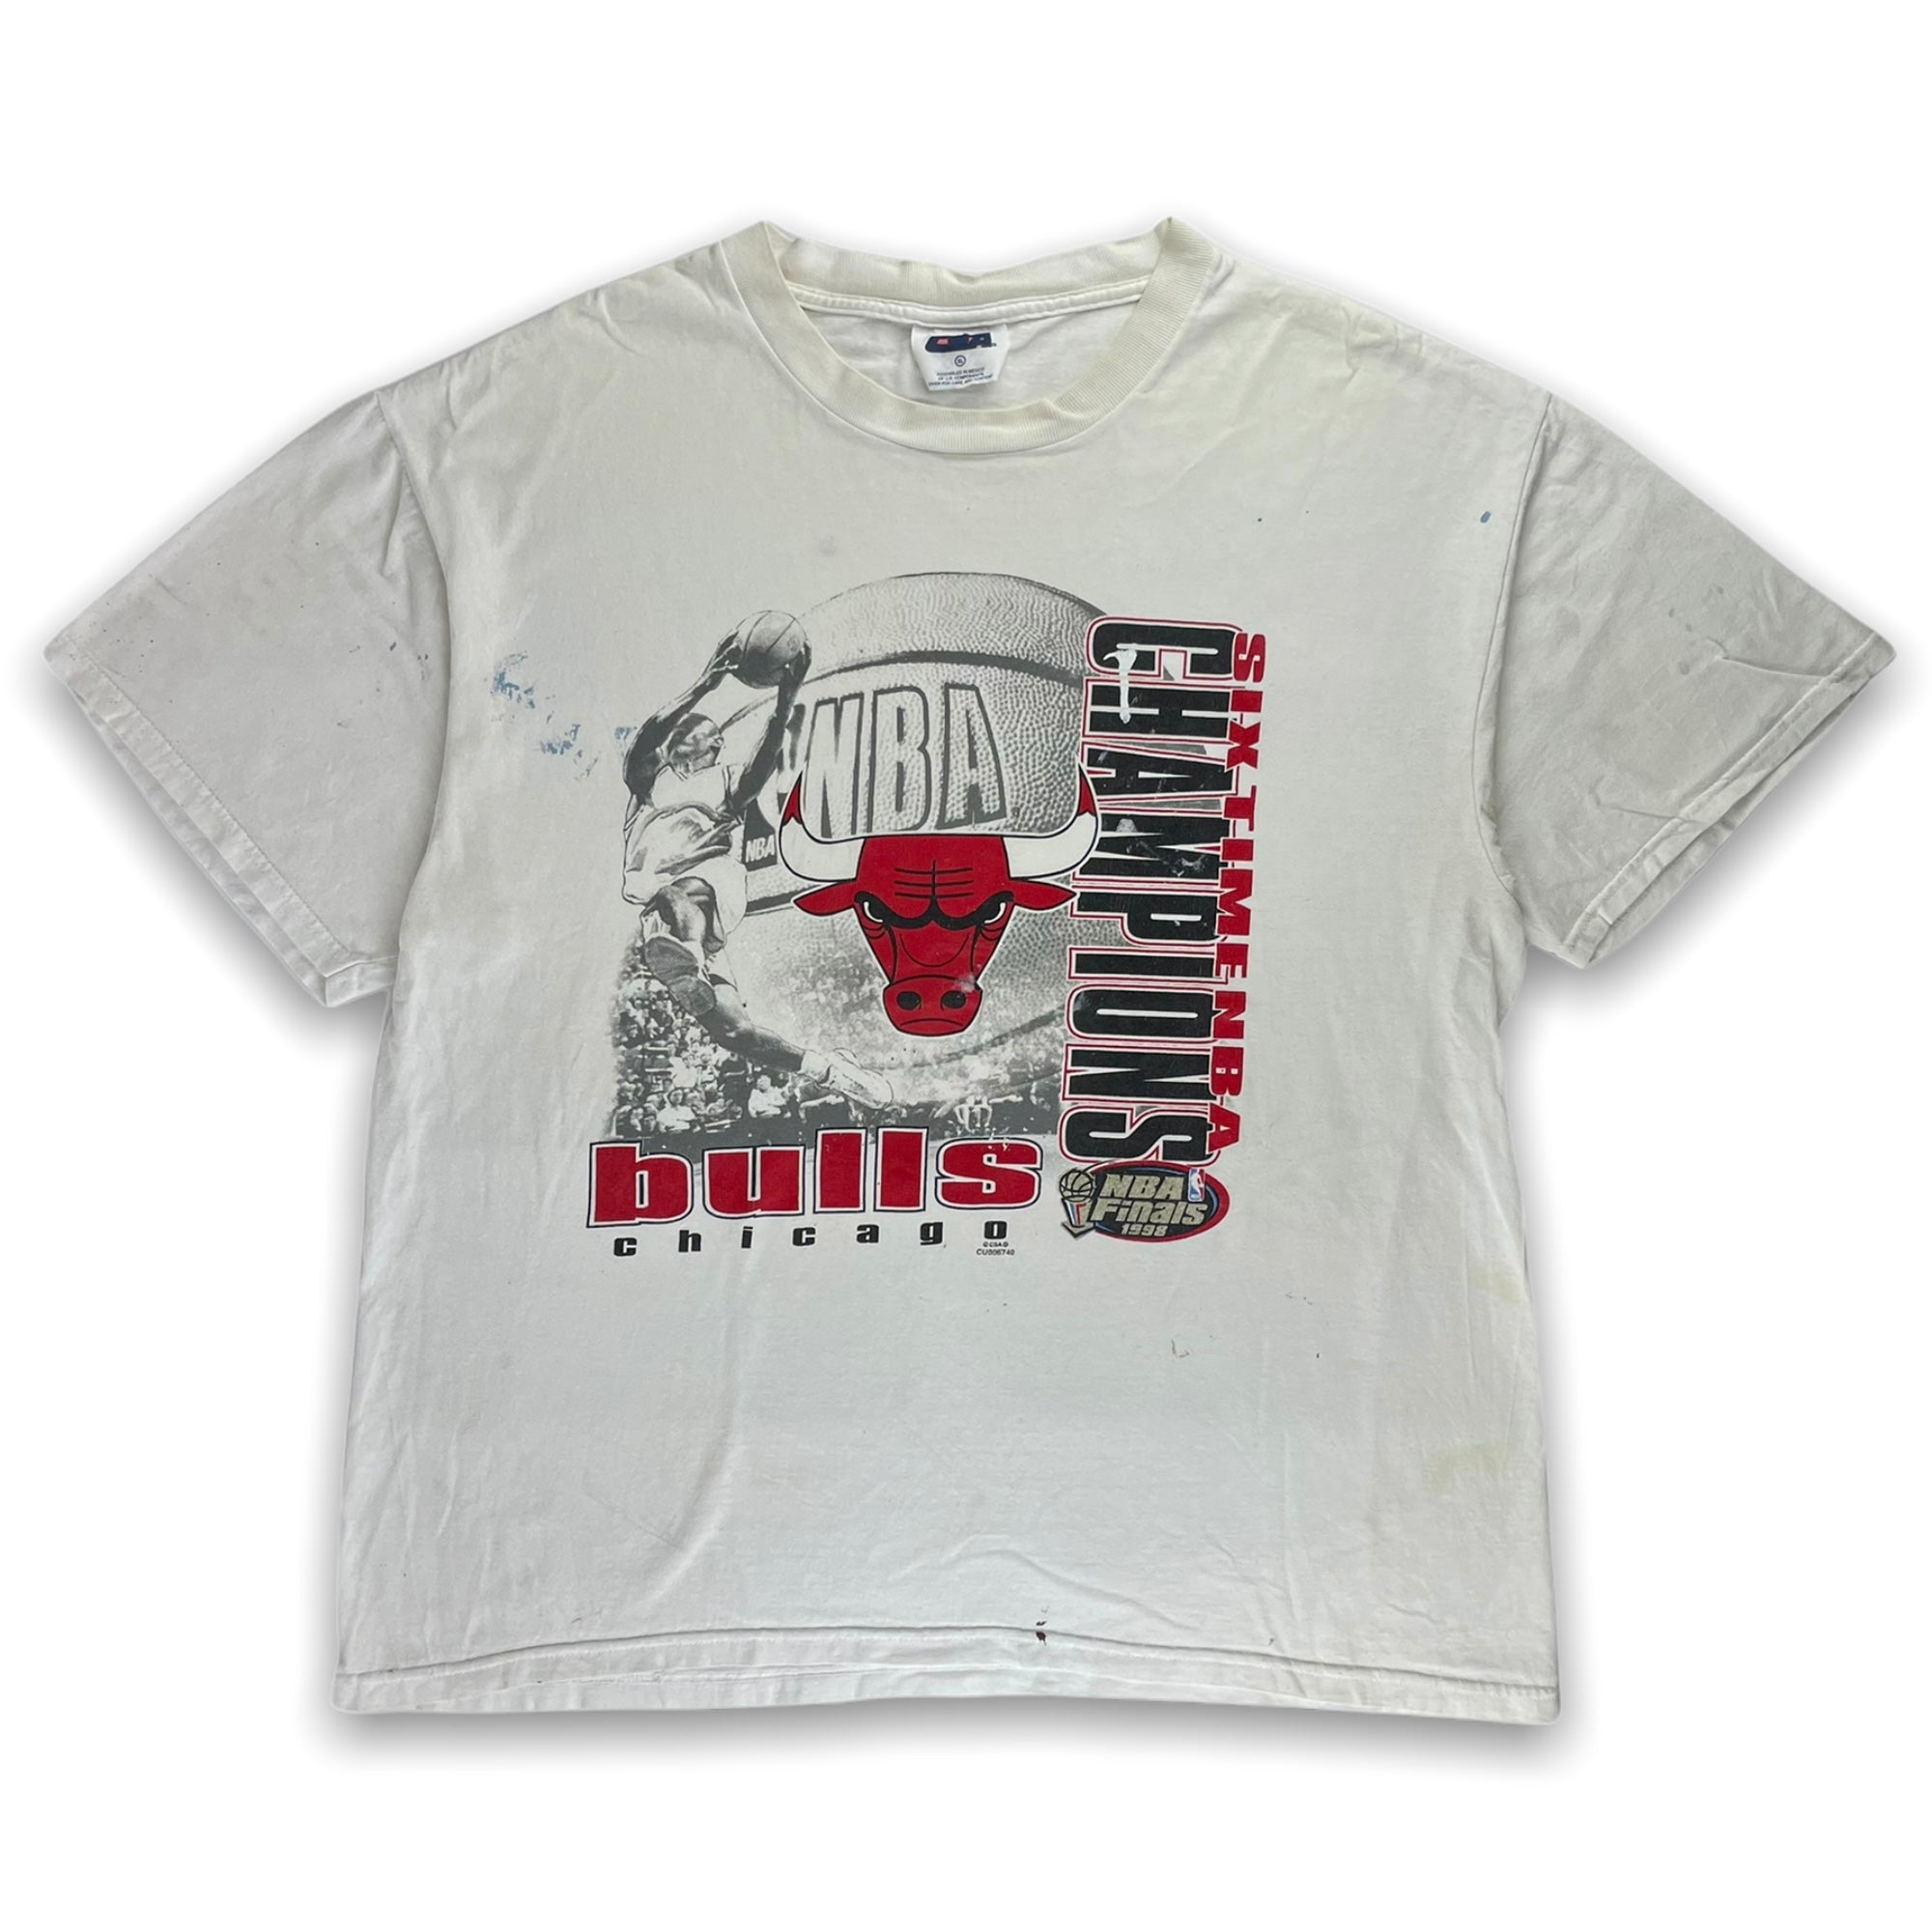 Vintage 1998 Bulls Championship T-shirt - Restorecph